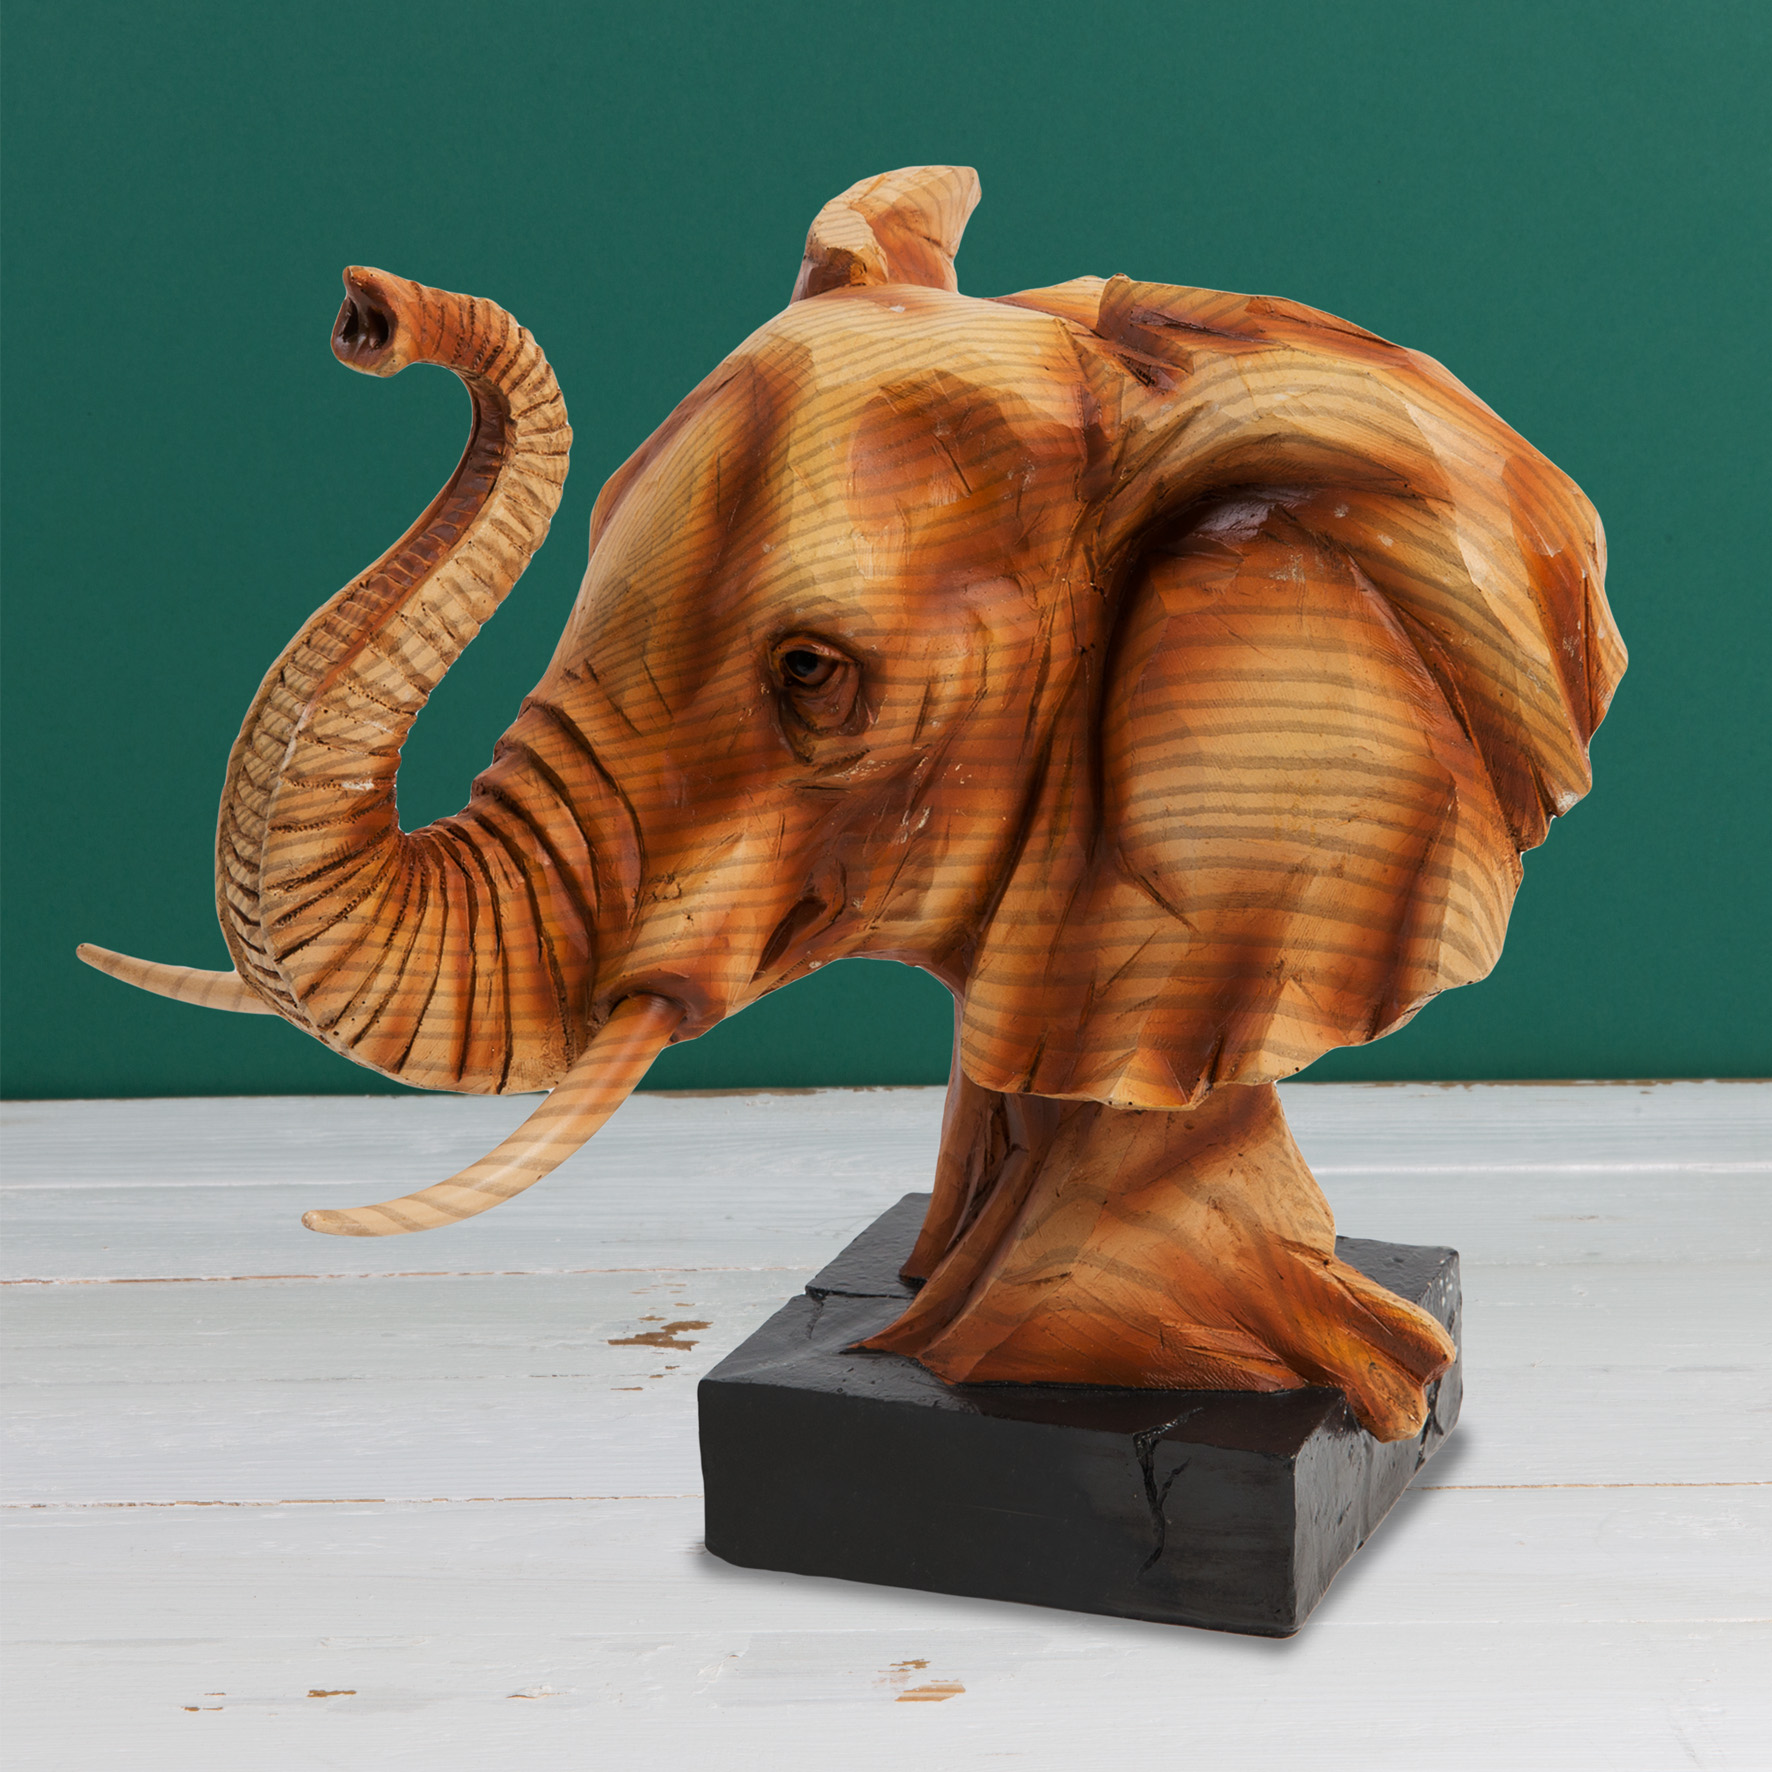 Naturecraft Wood Effect Resin Animal Statue Ornament Figurine Choose Design 